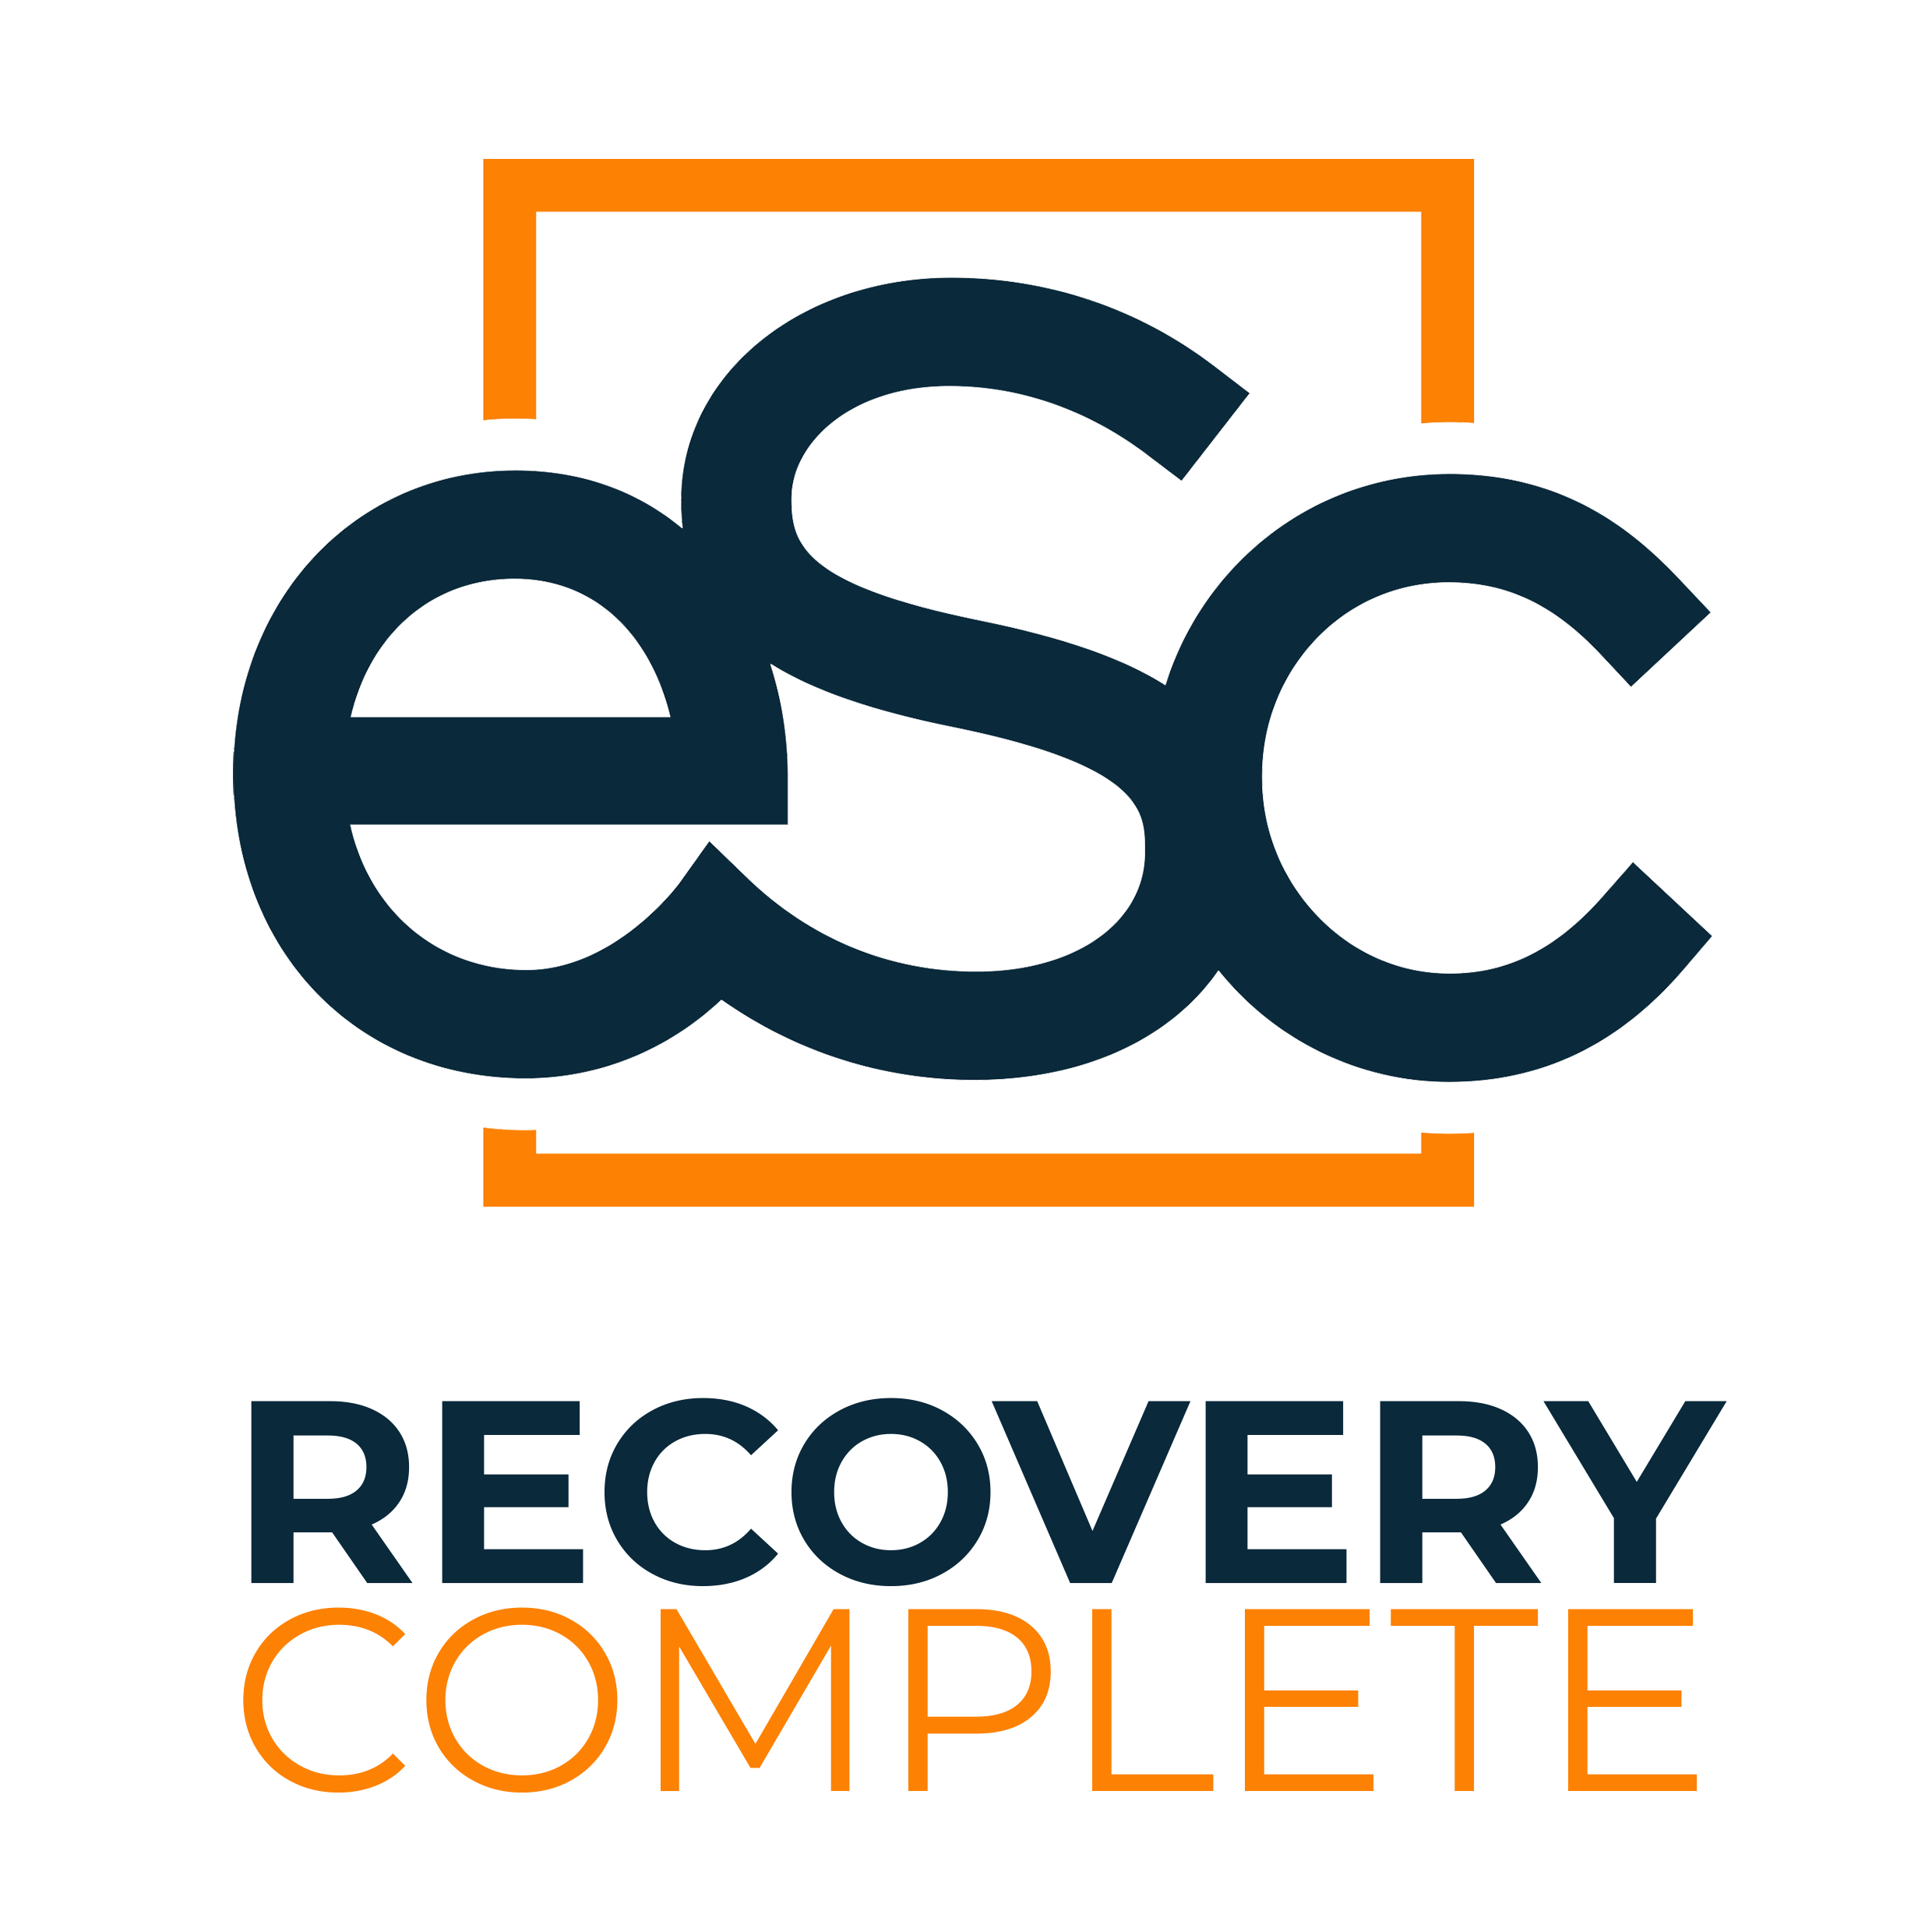 ESC Recovery Complete Logo